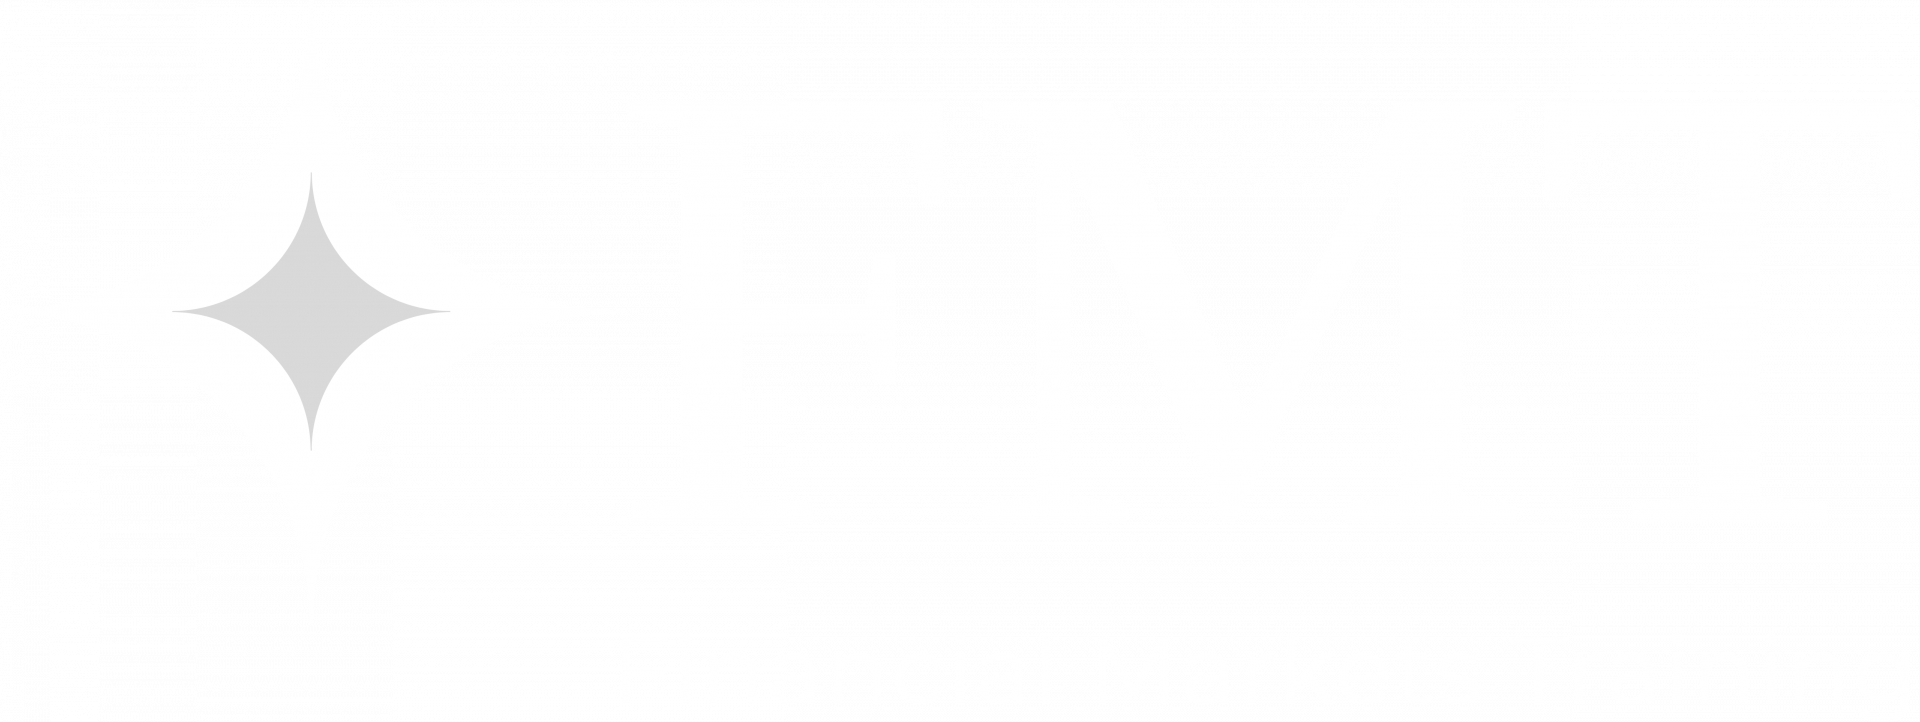 Financial Markets Training